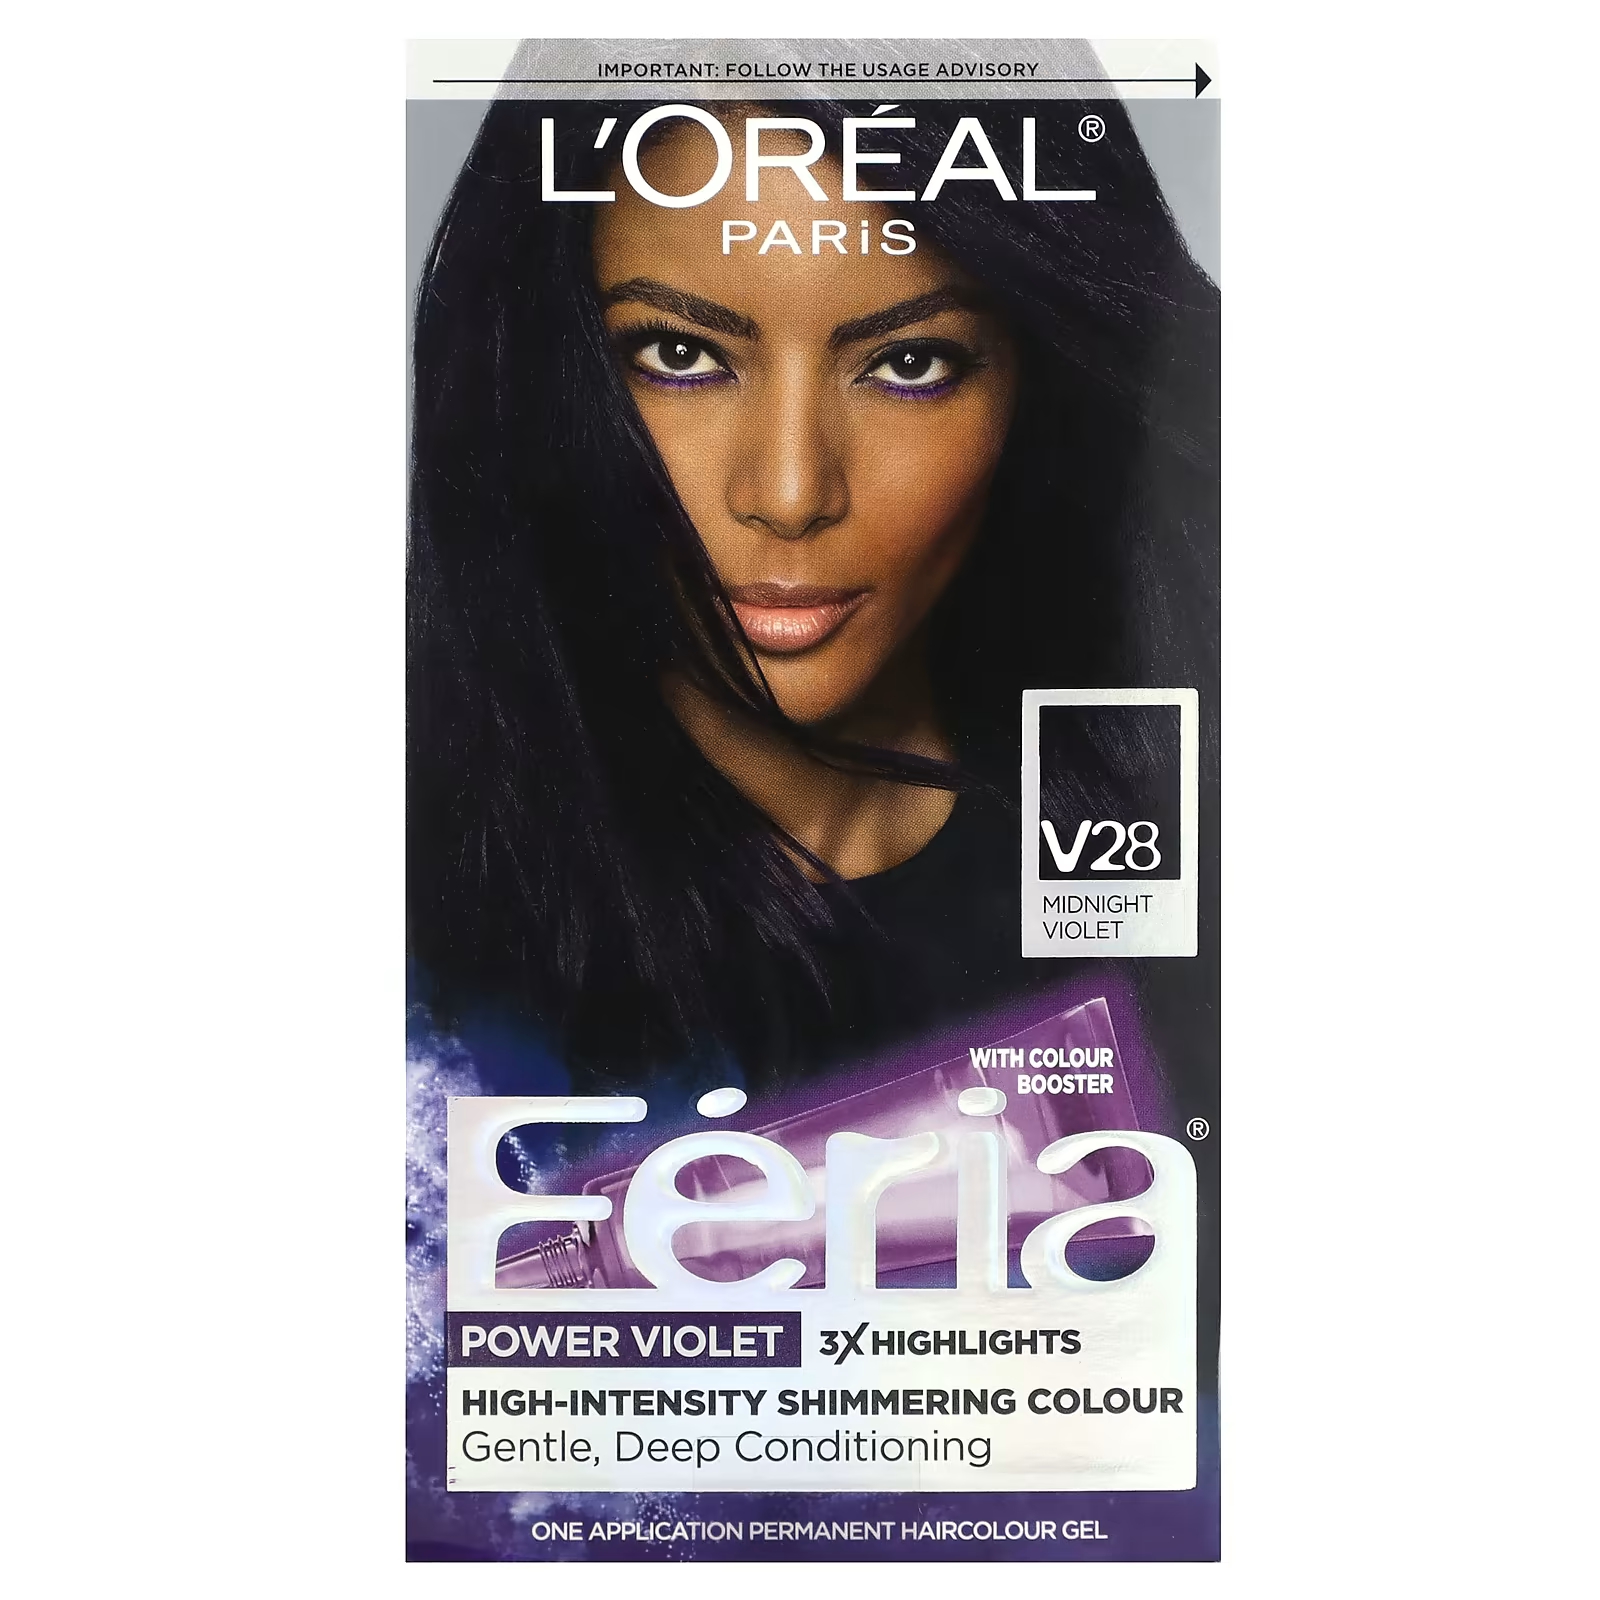 L'Oréal Feria Power Violet Интенсивный мерцающий цвет V28 Midnight Violet 1 применение фото